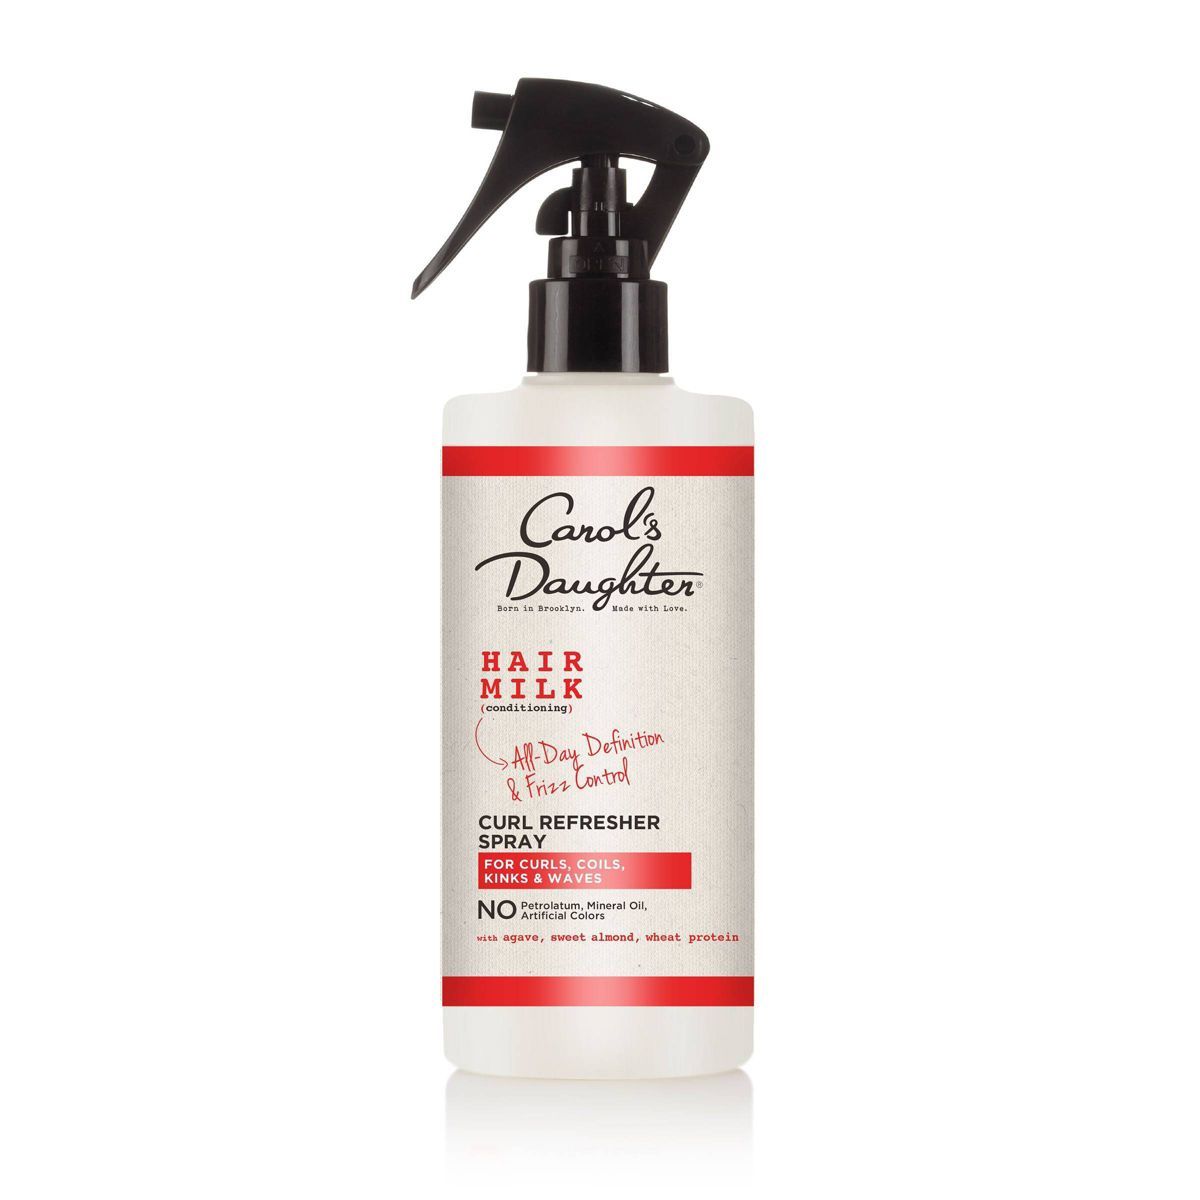 Carol's Daughter Hair Milk Nourishing and Conditioning Curl Refresher Spray - 10 floz | Target